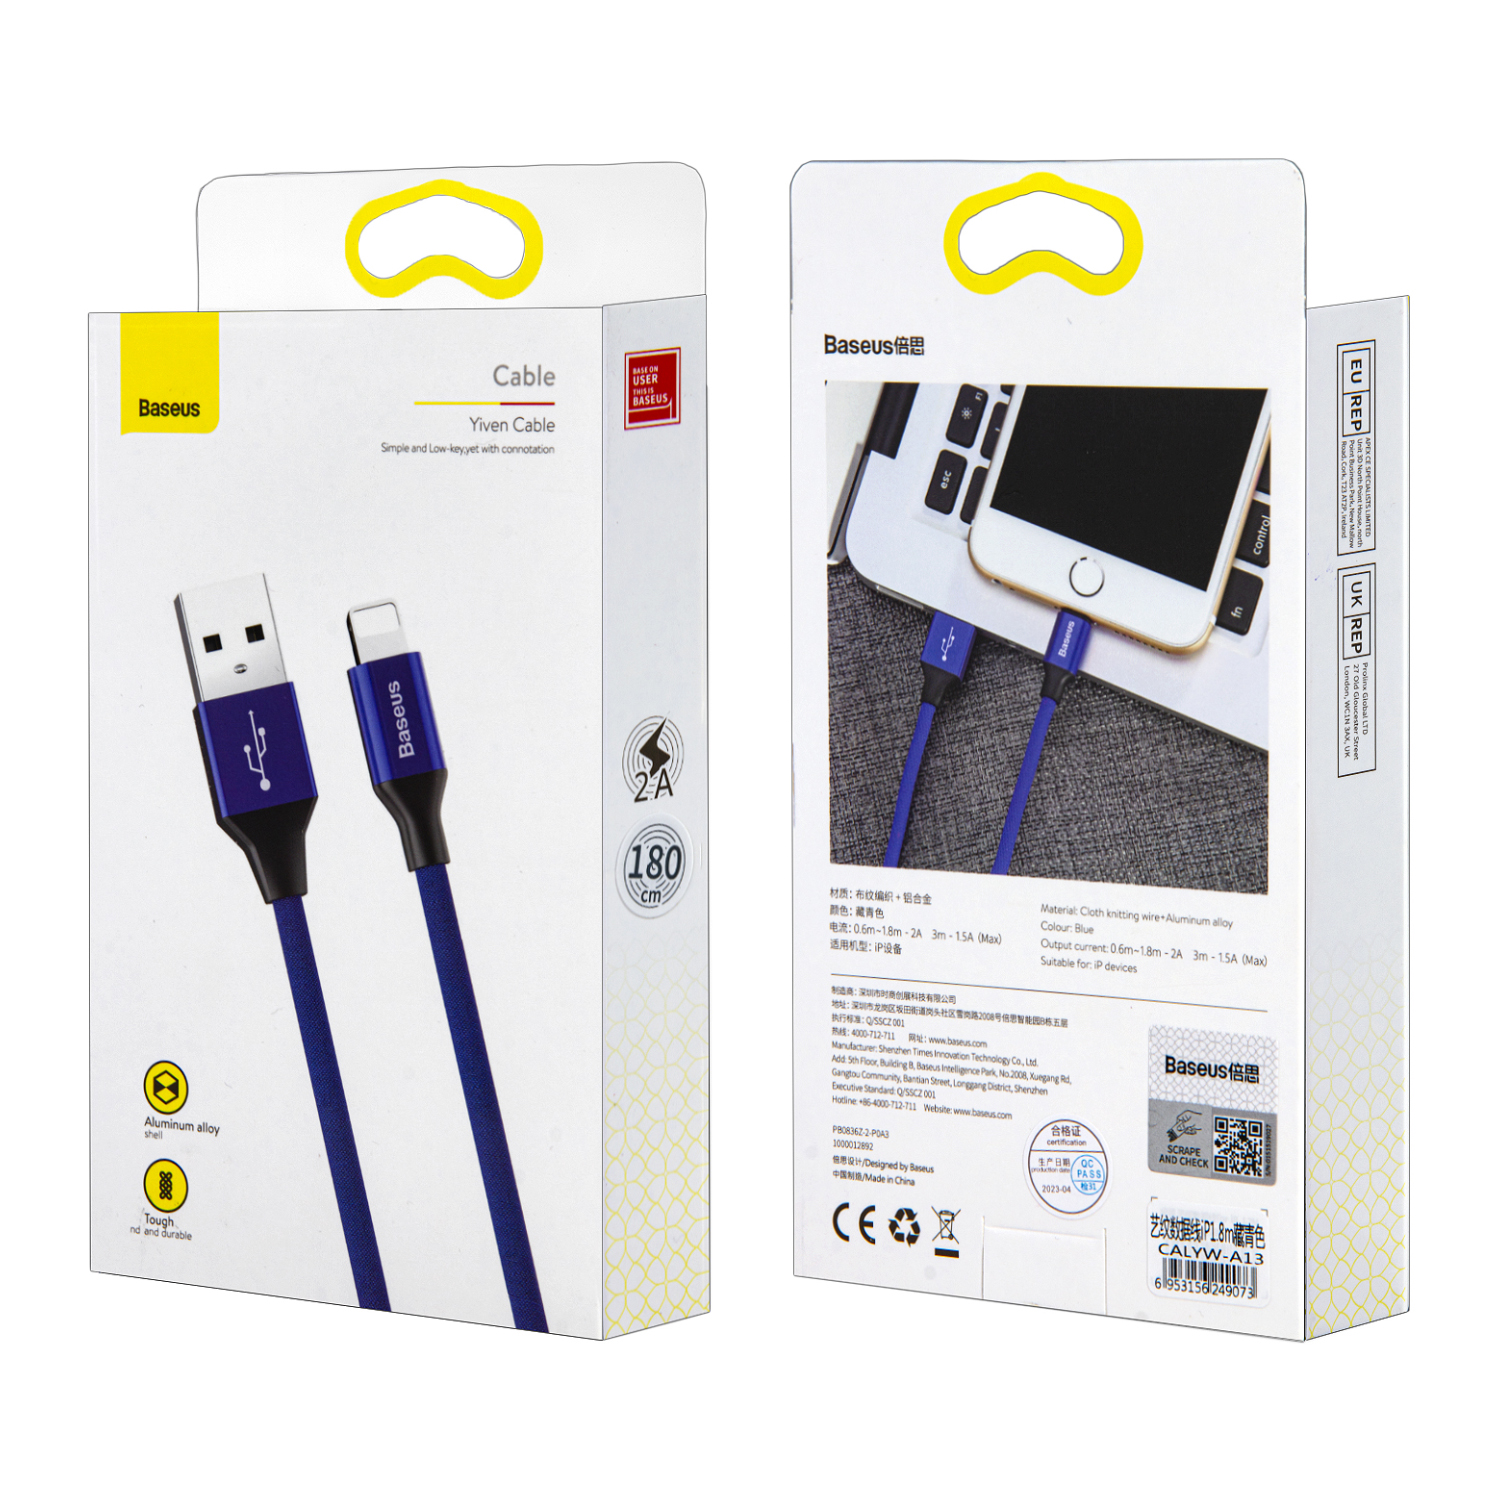 Кабель USB Lightning 1.8M 2A Yiven Cable Baseus синий CALYW-A13